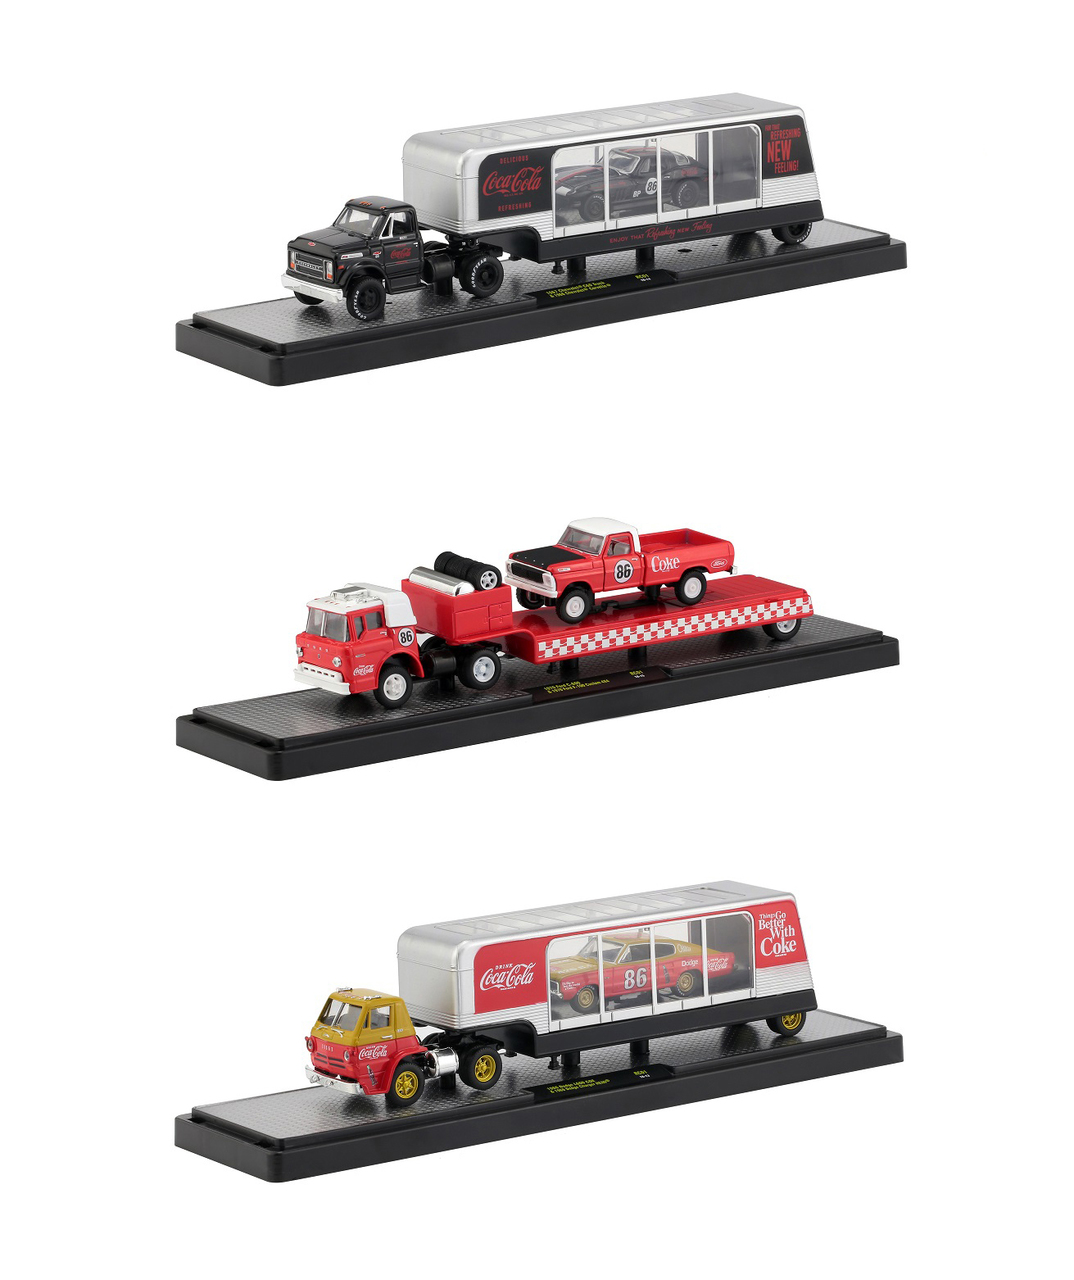 Auto Haulers Race Version "coca-cola" Release Set Of 3 Trucks 1/64 Diecast Models By M2 Machines